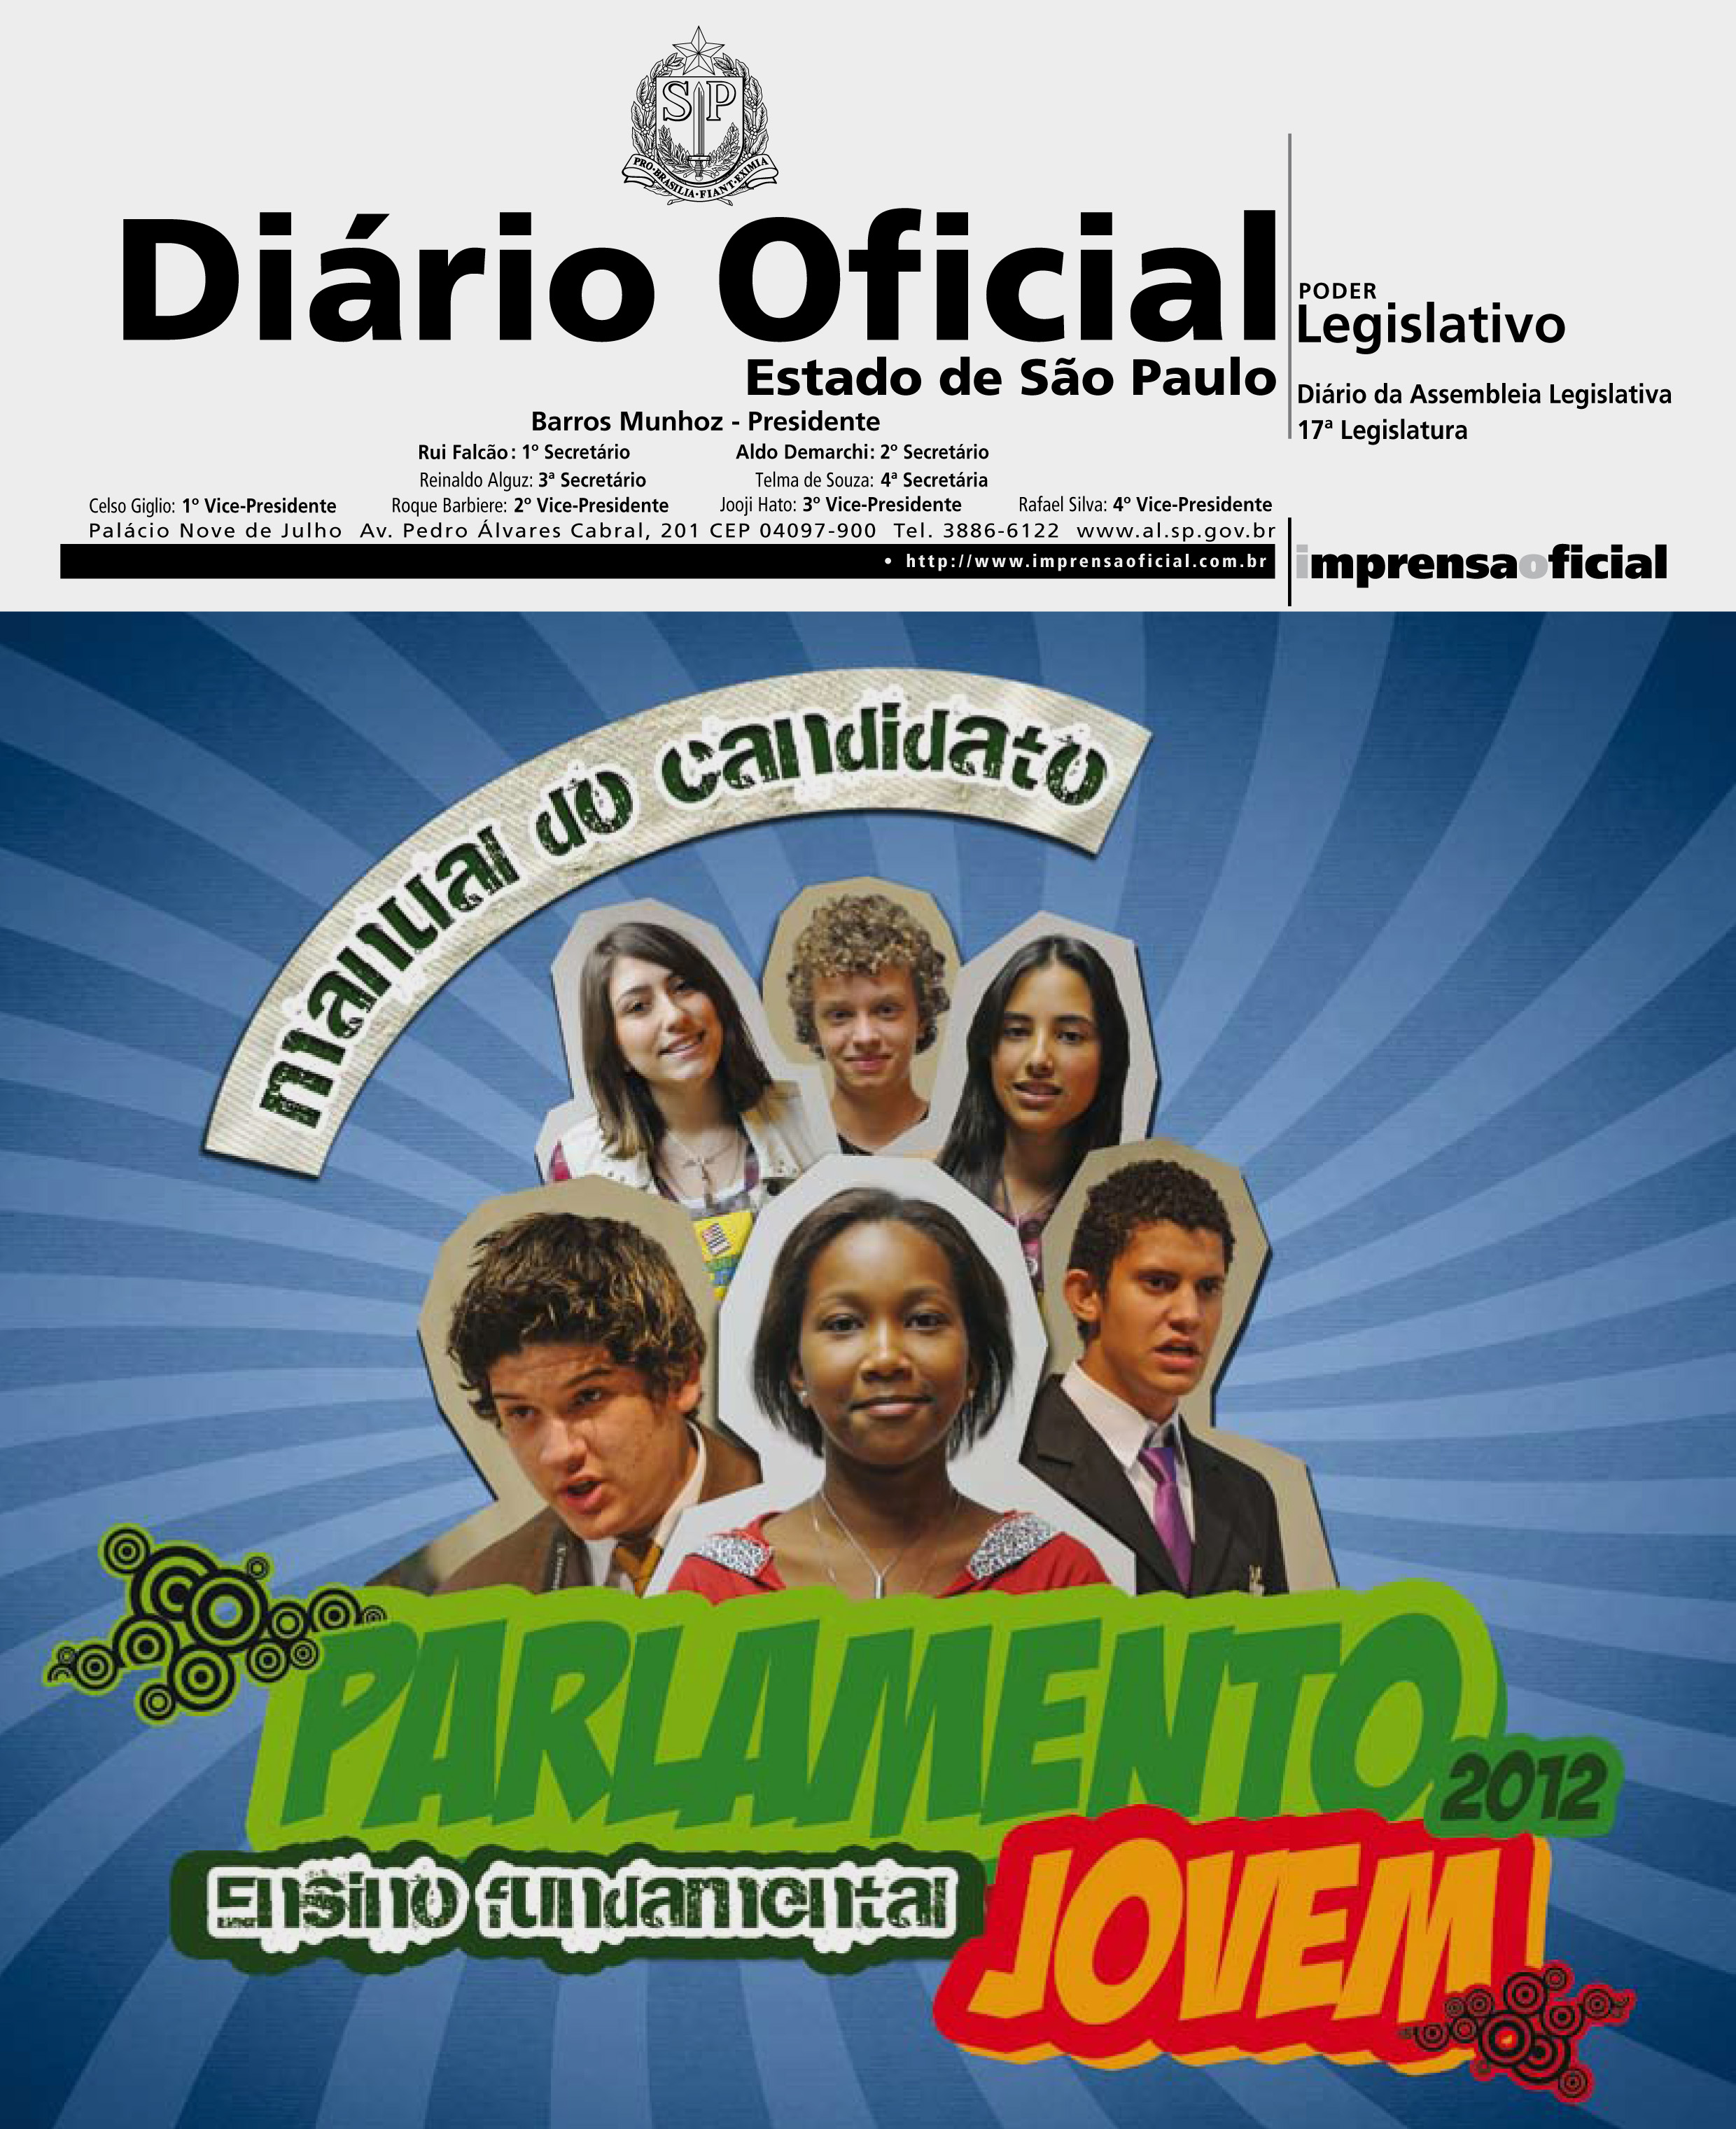 Parlamento Jovem <a style='float:right;color:#ccc' href='https://www3.al.sp.gov.br/repositorio/noticia/N-06-2012/fg115581.jpg' target=_blank><i class='bi bi-zoom-in'></i> Clique para ver a imagem </a>